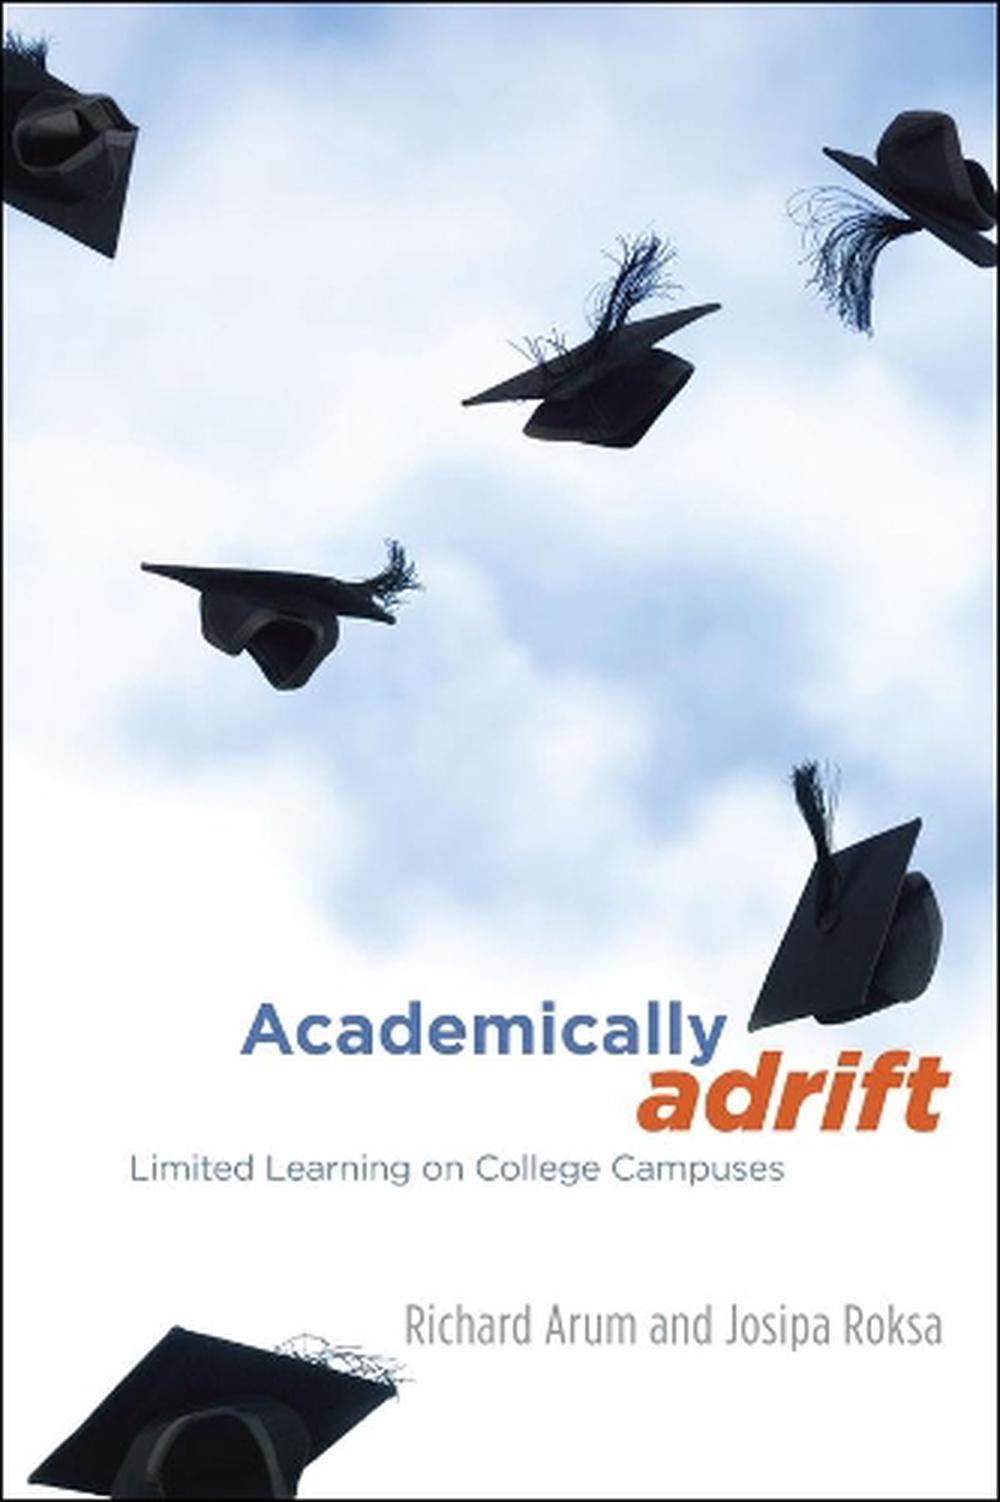 richard arum academically adrift